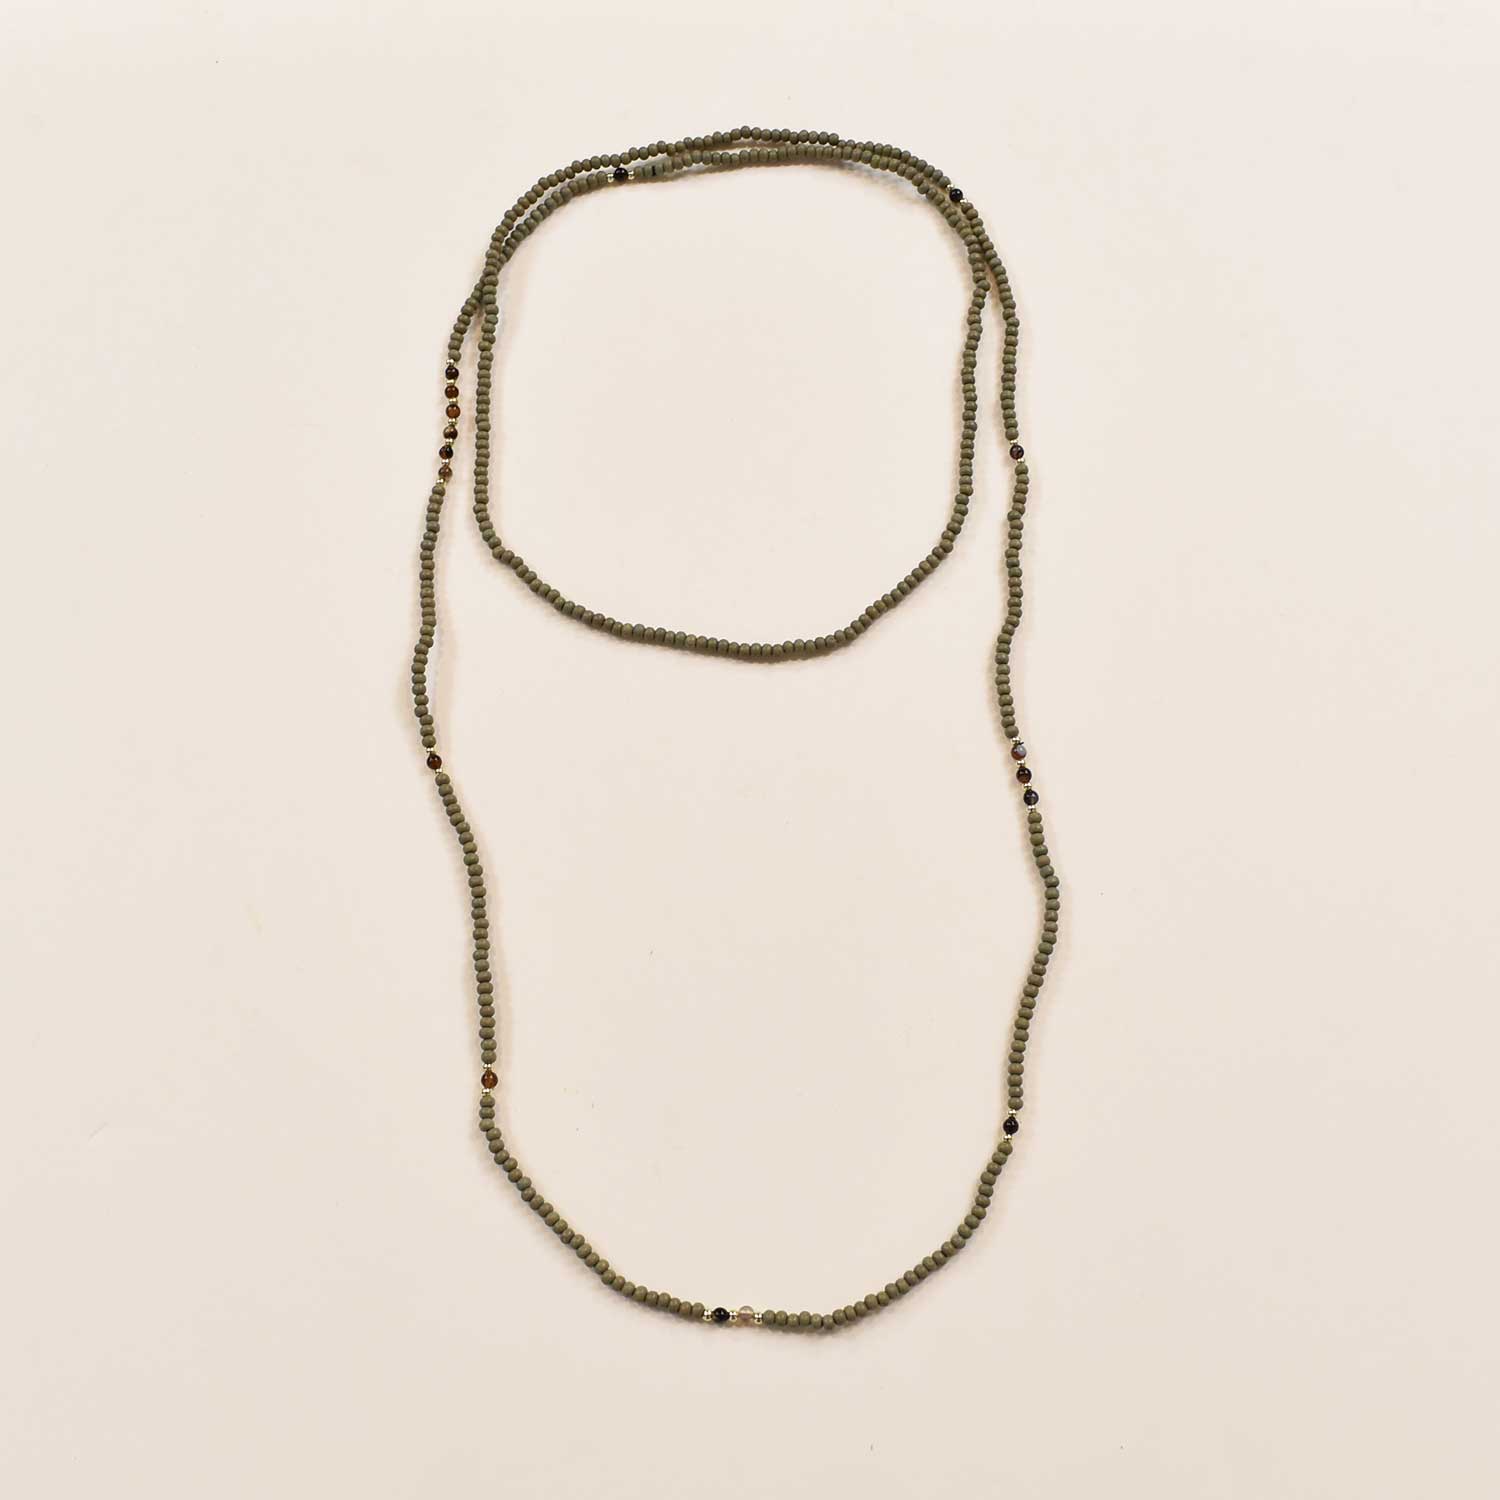 Kaki long beads necklace